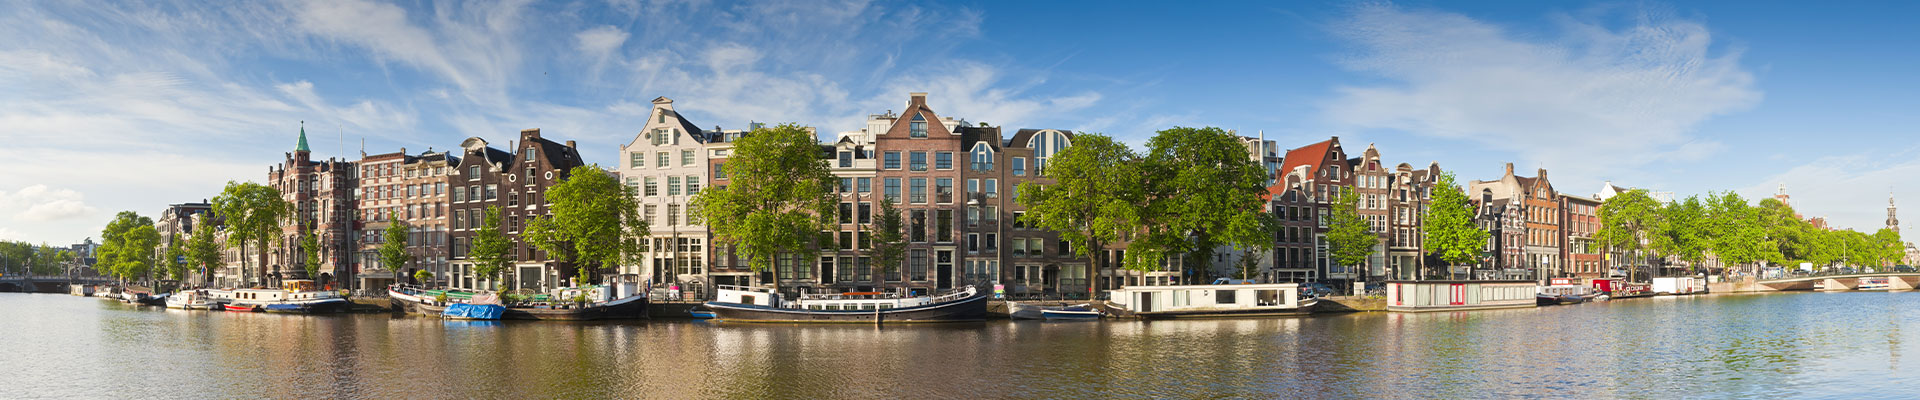 Dutch Waterways River Cruises